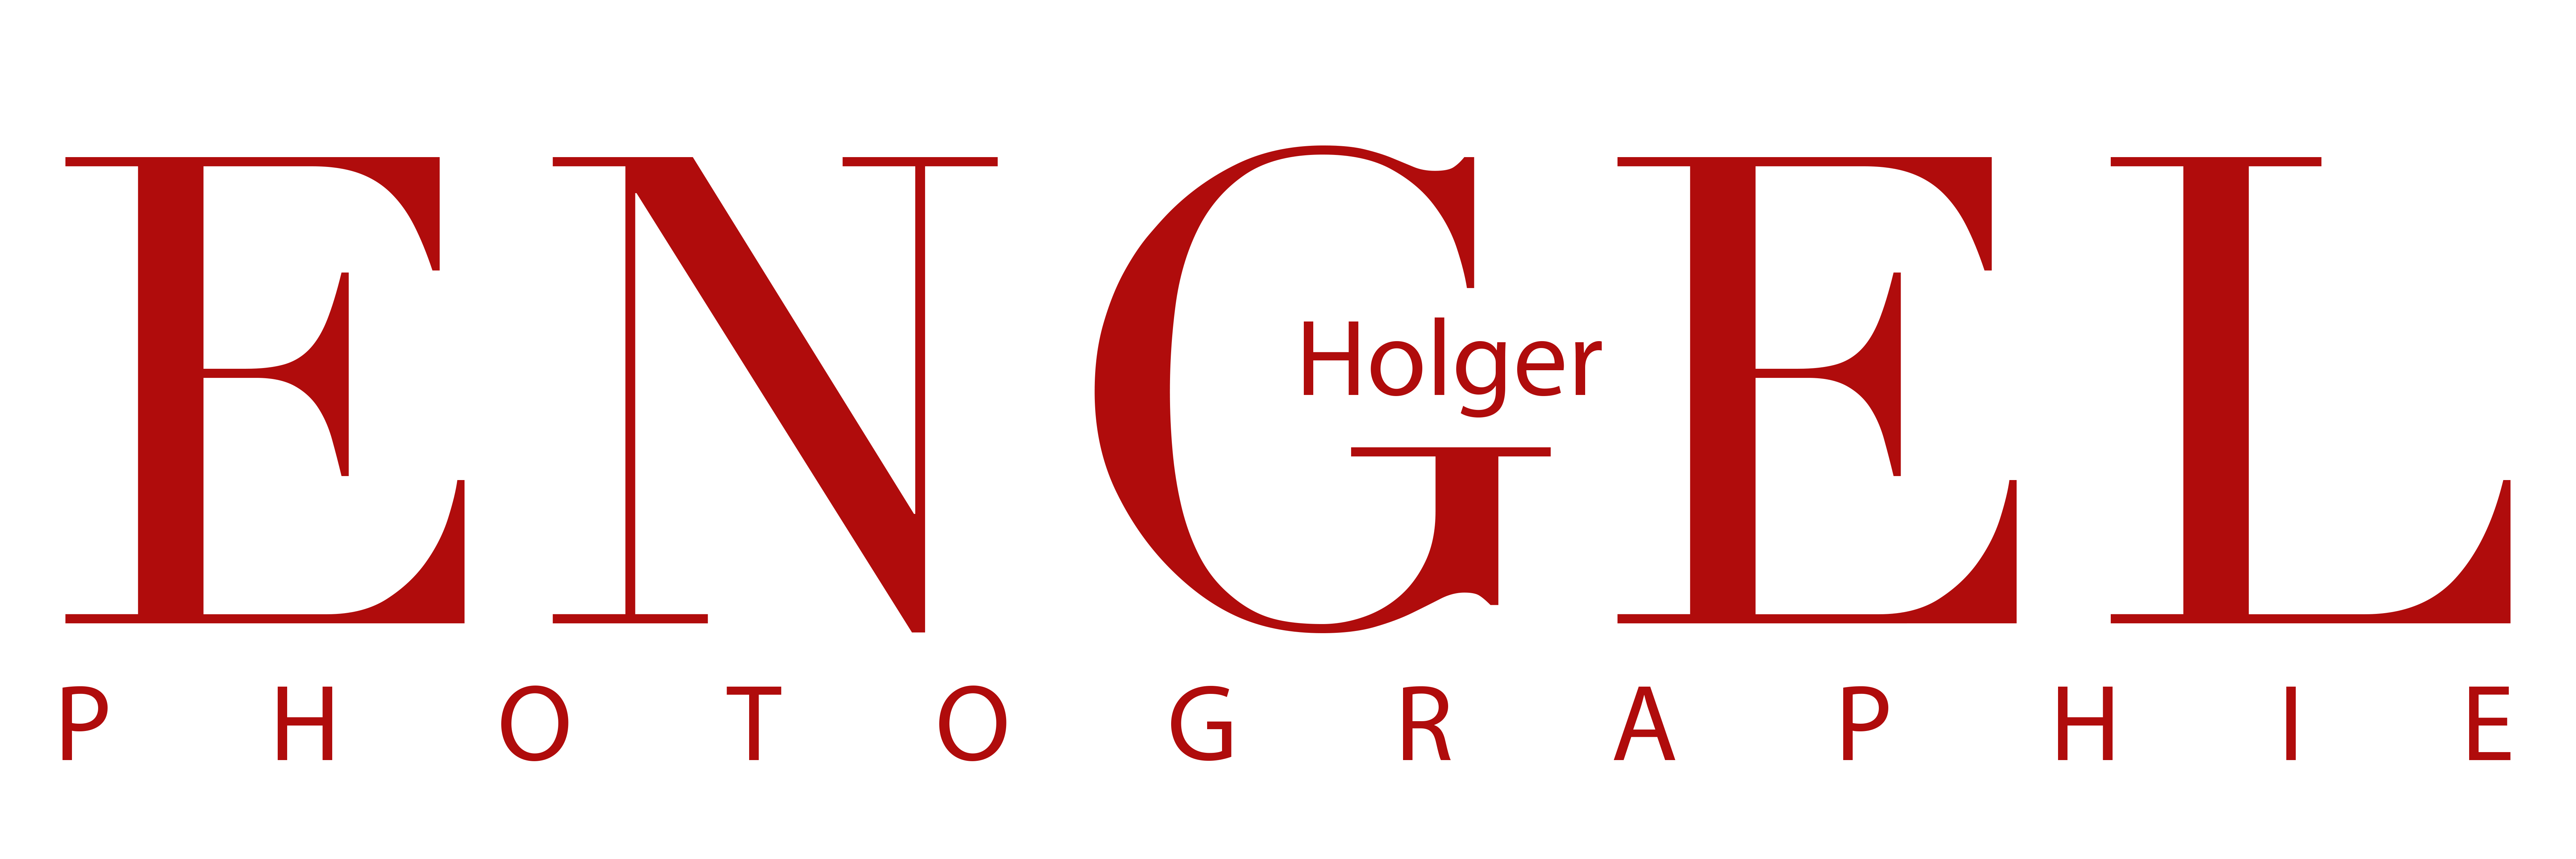 Holger Engel | PHOTOGRAPIE